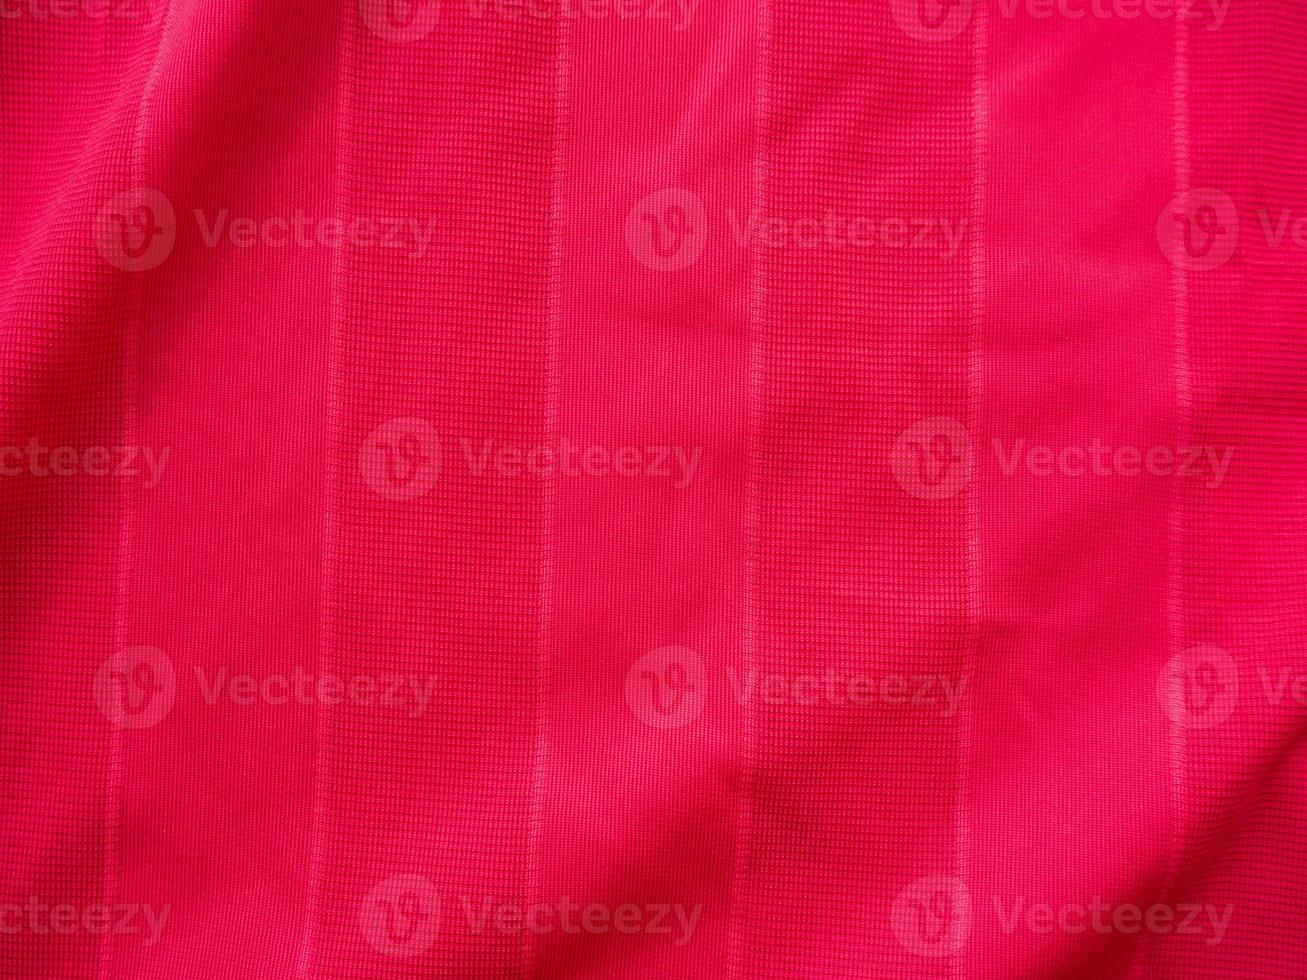 röda sportkläder tyg jersey textur foto